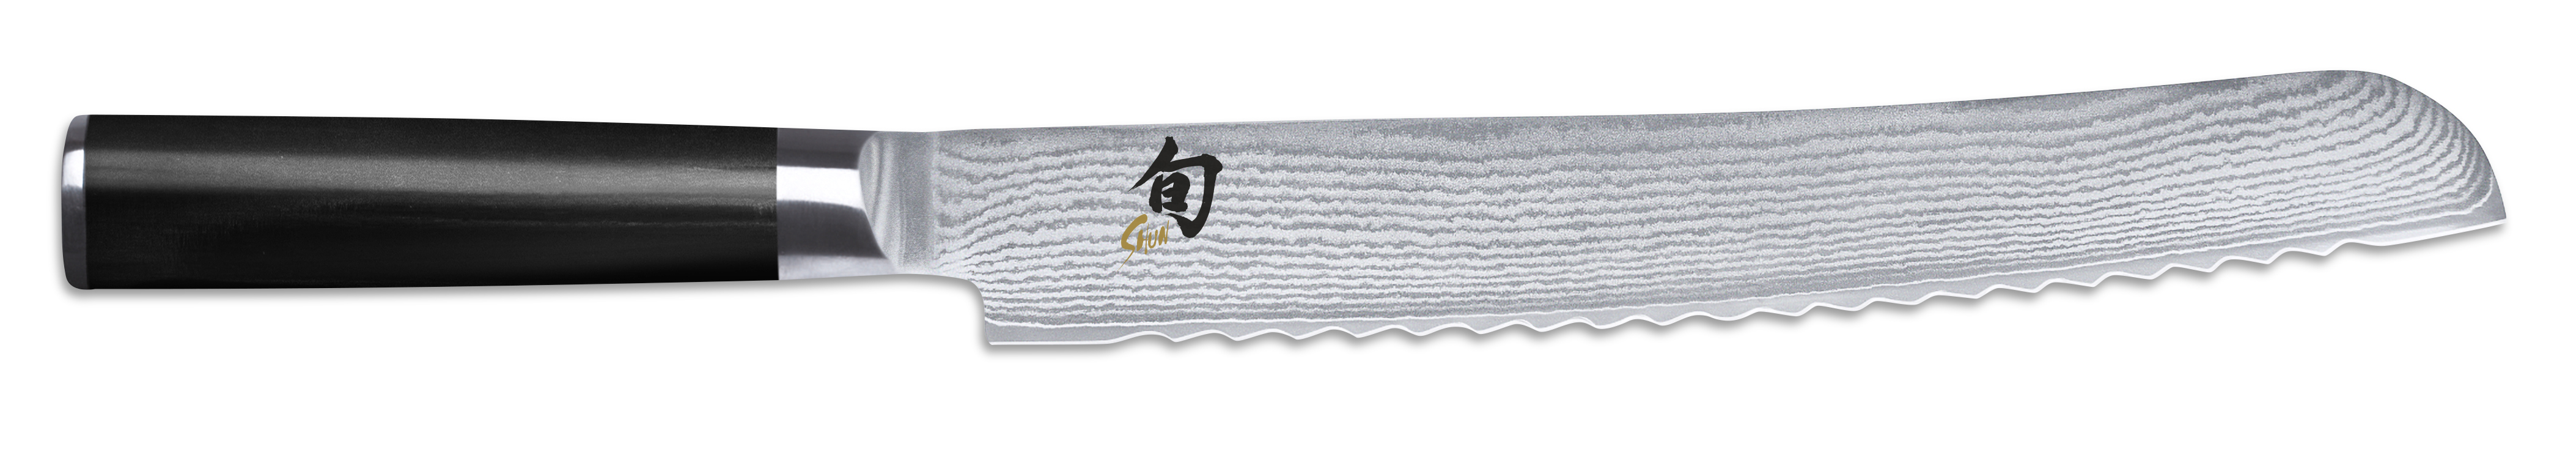 Brotmessser 23 cm KAI Shun Classic rostfreien Damaszener-Stahl mit 32 Lagen 